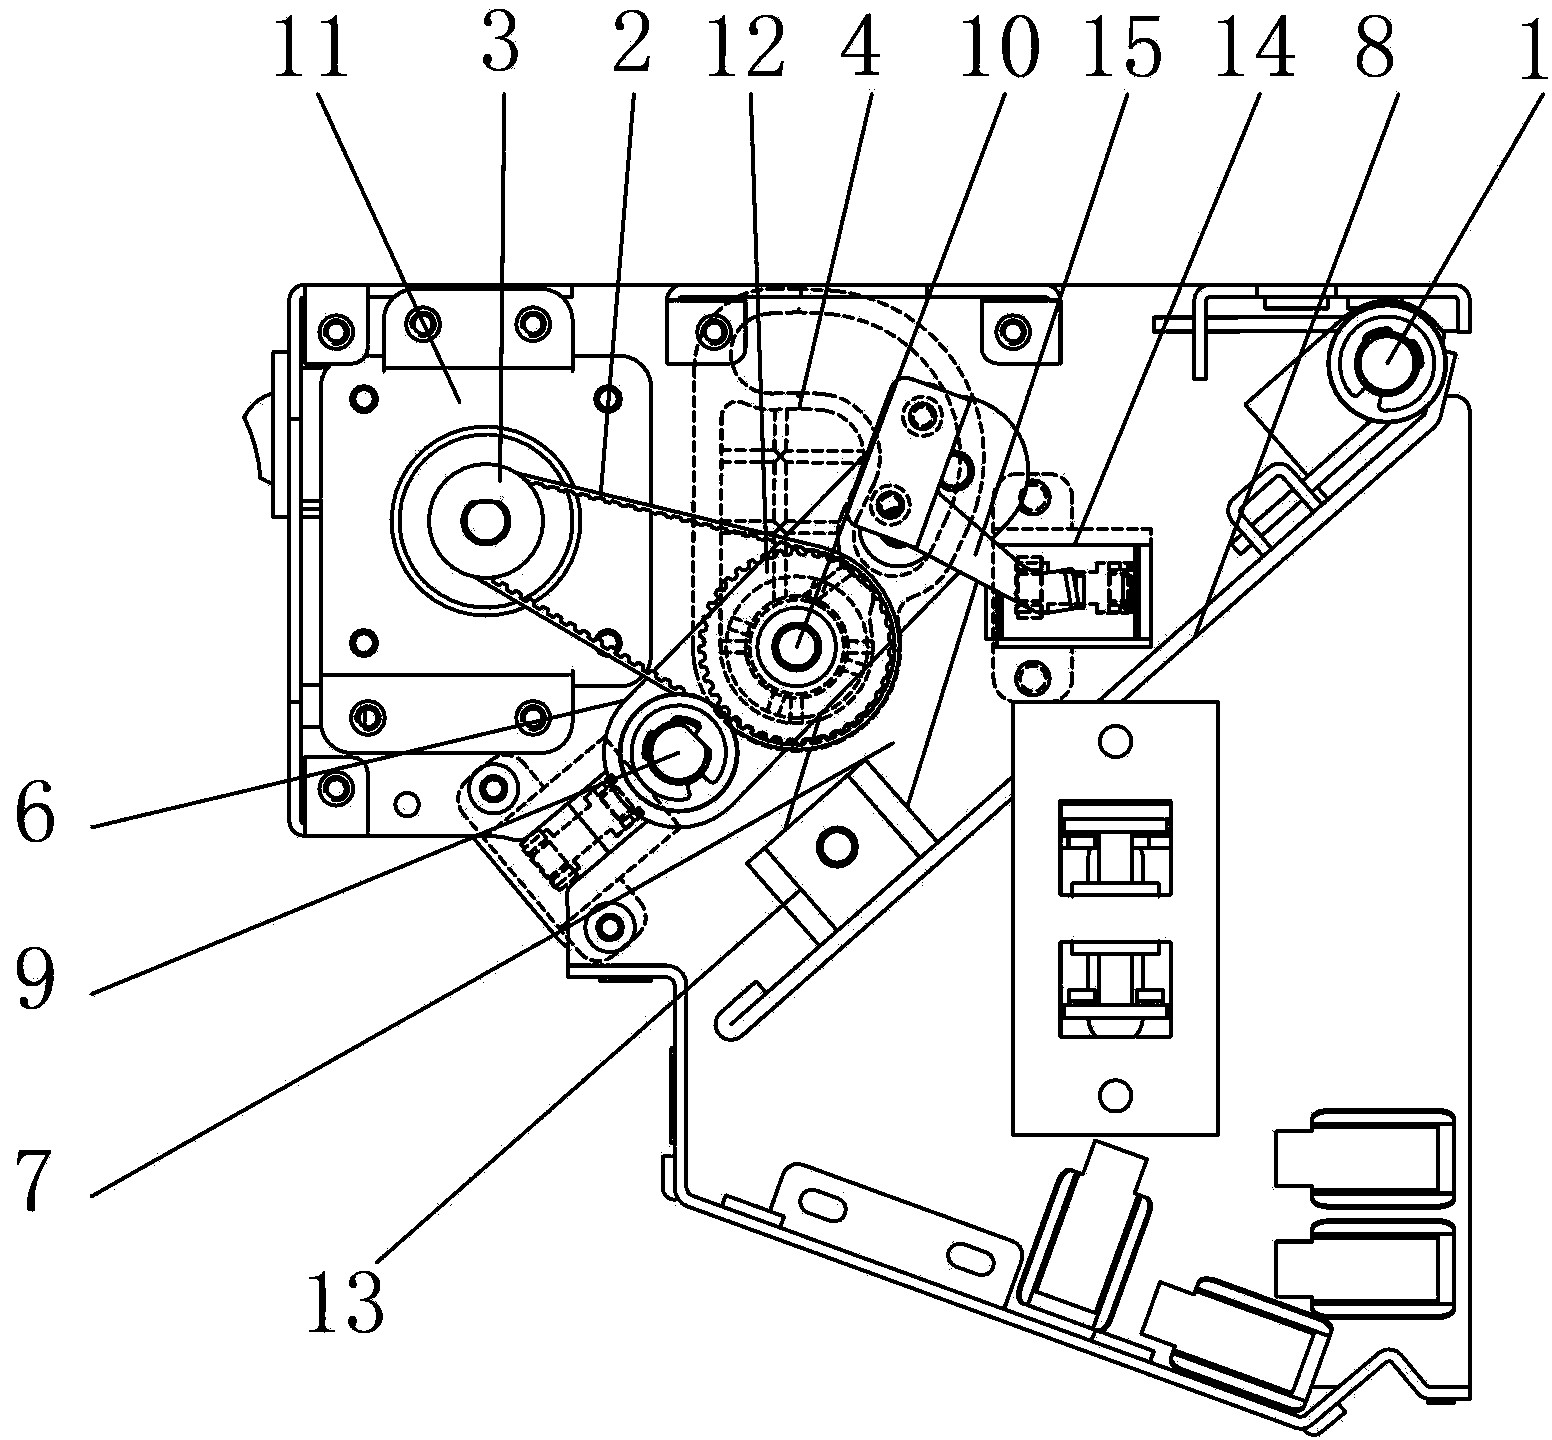 Connecting link-cam dual self-locking mechanism